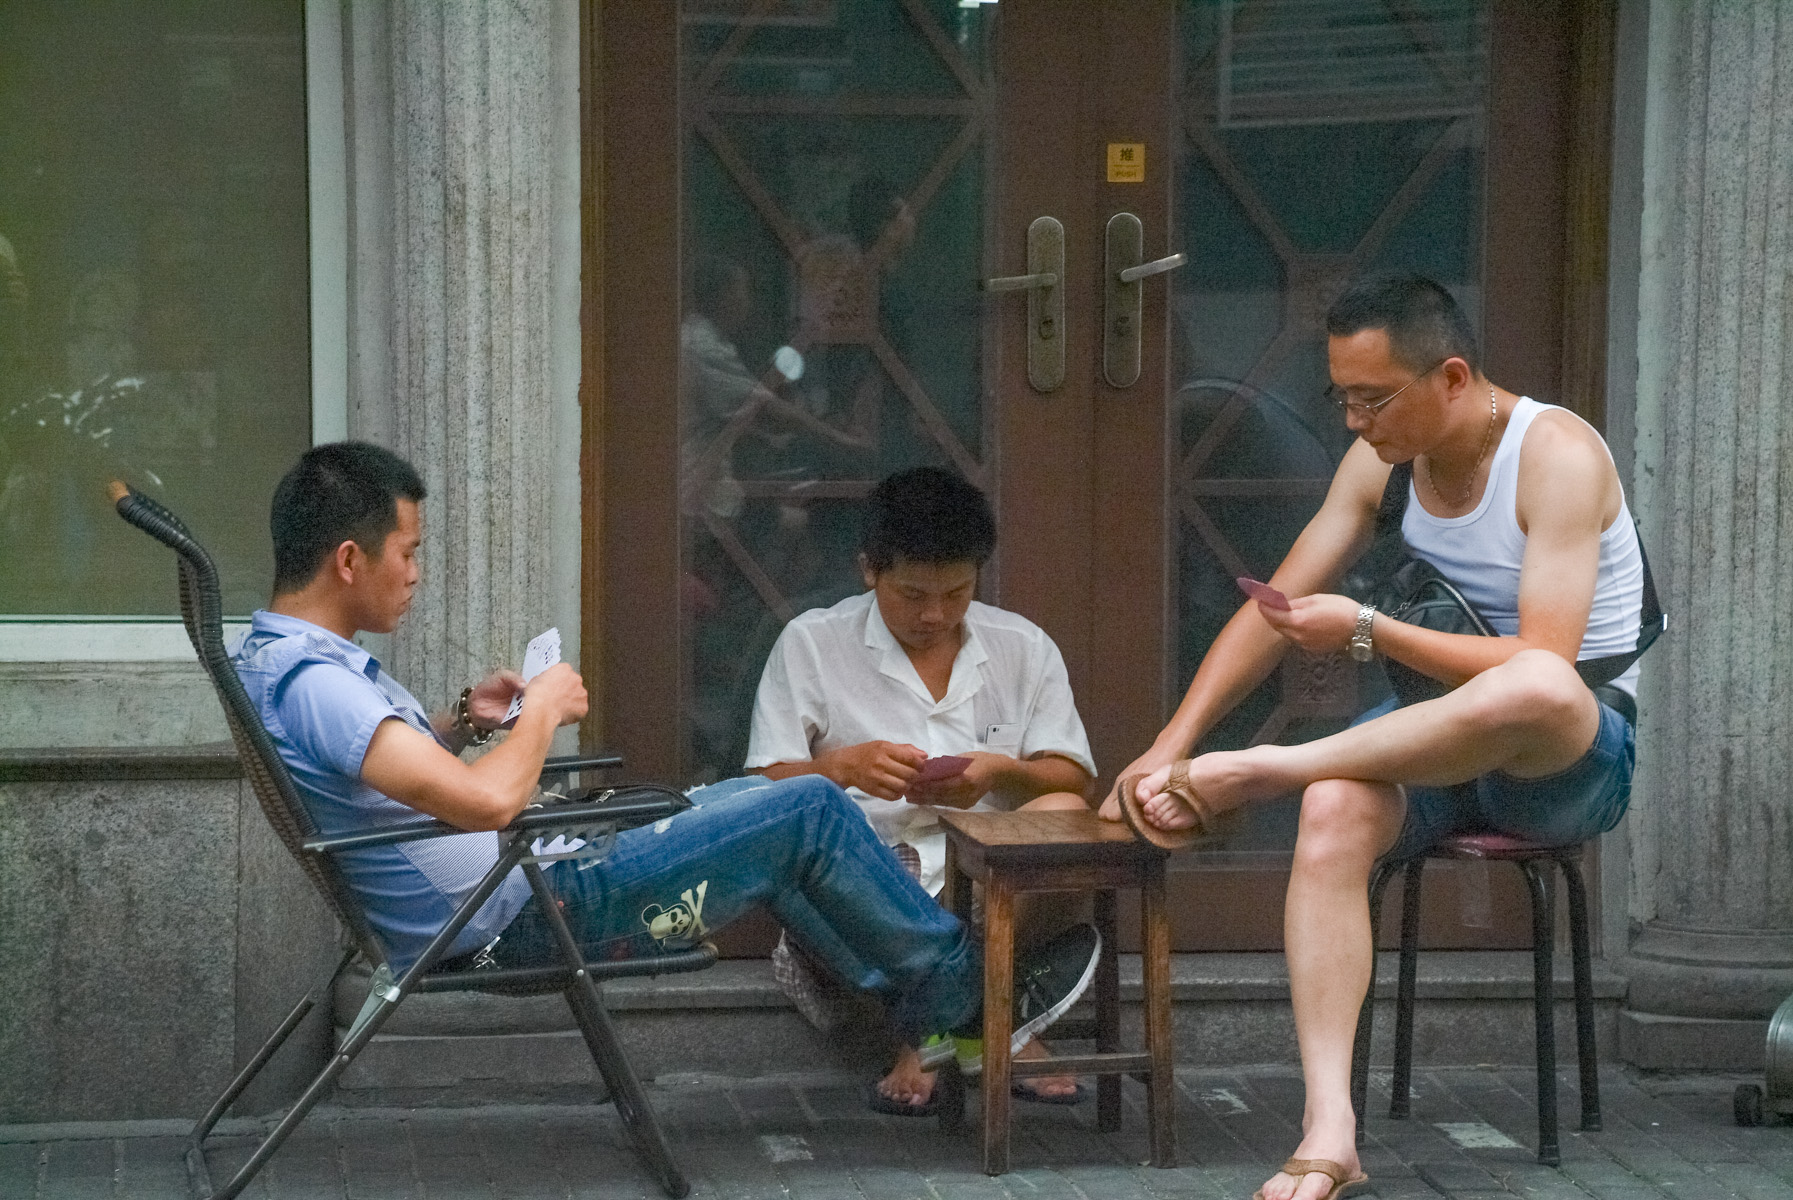 It's poker time in Shanghai